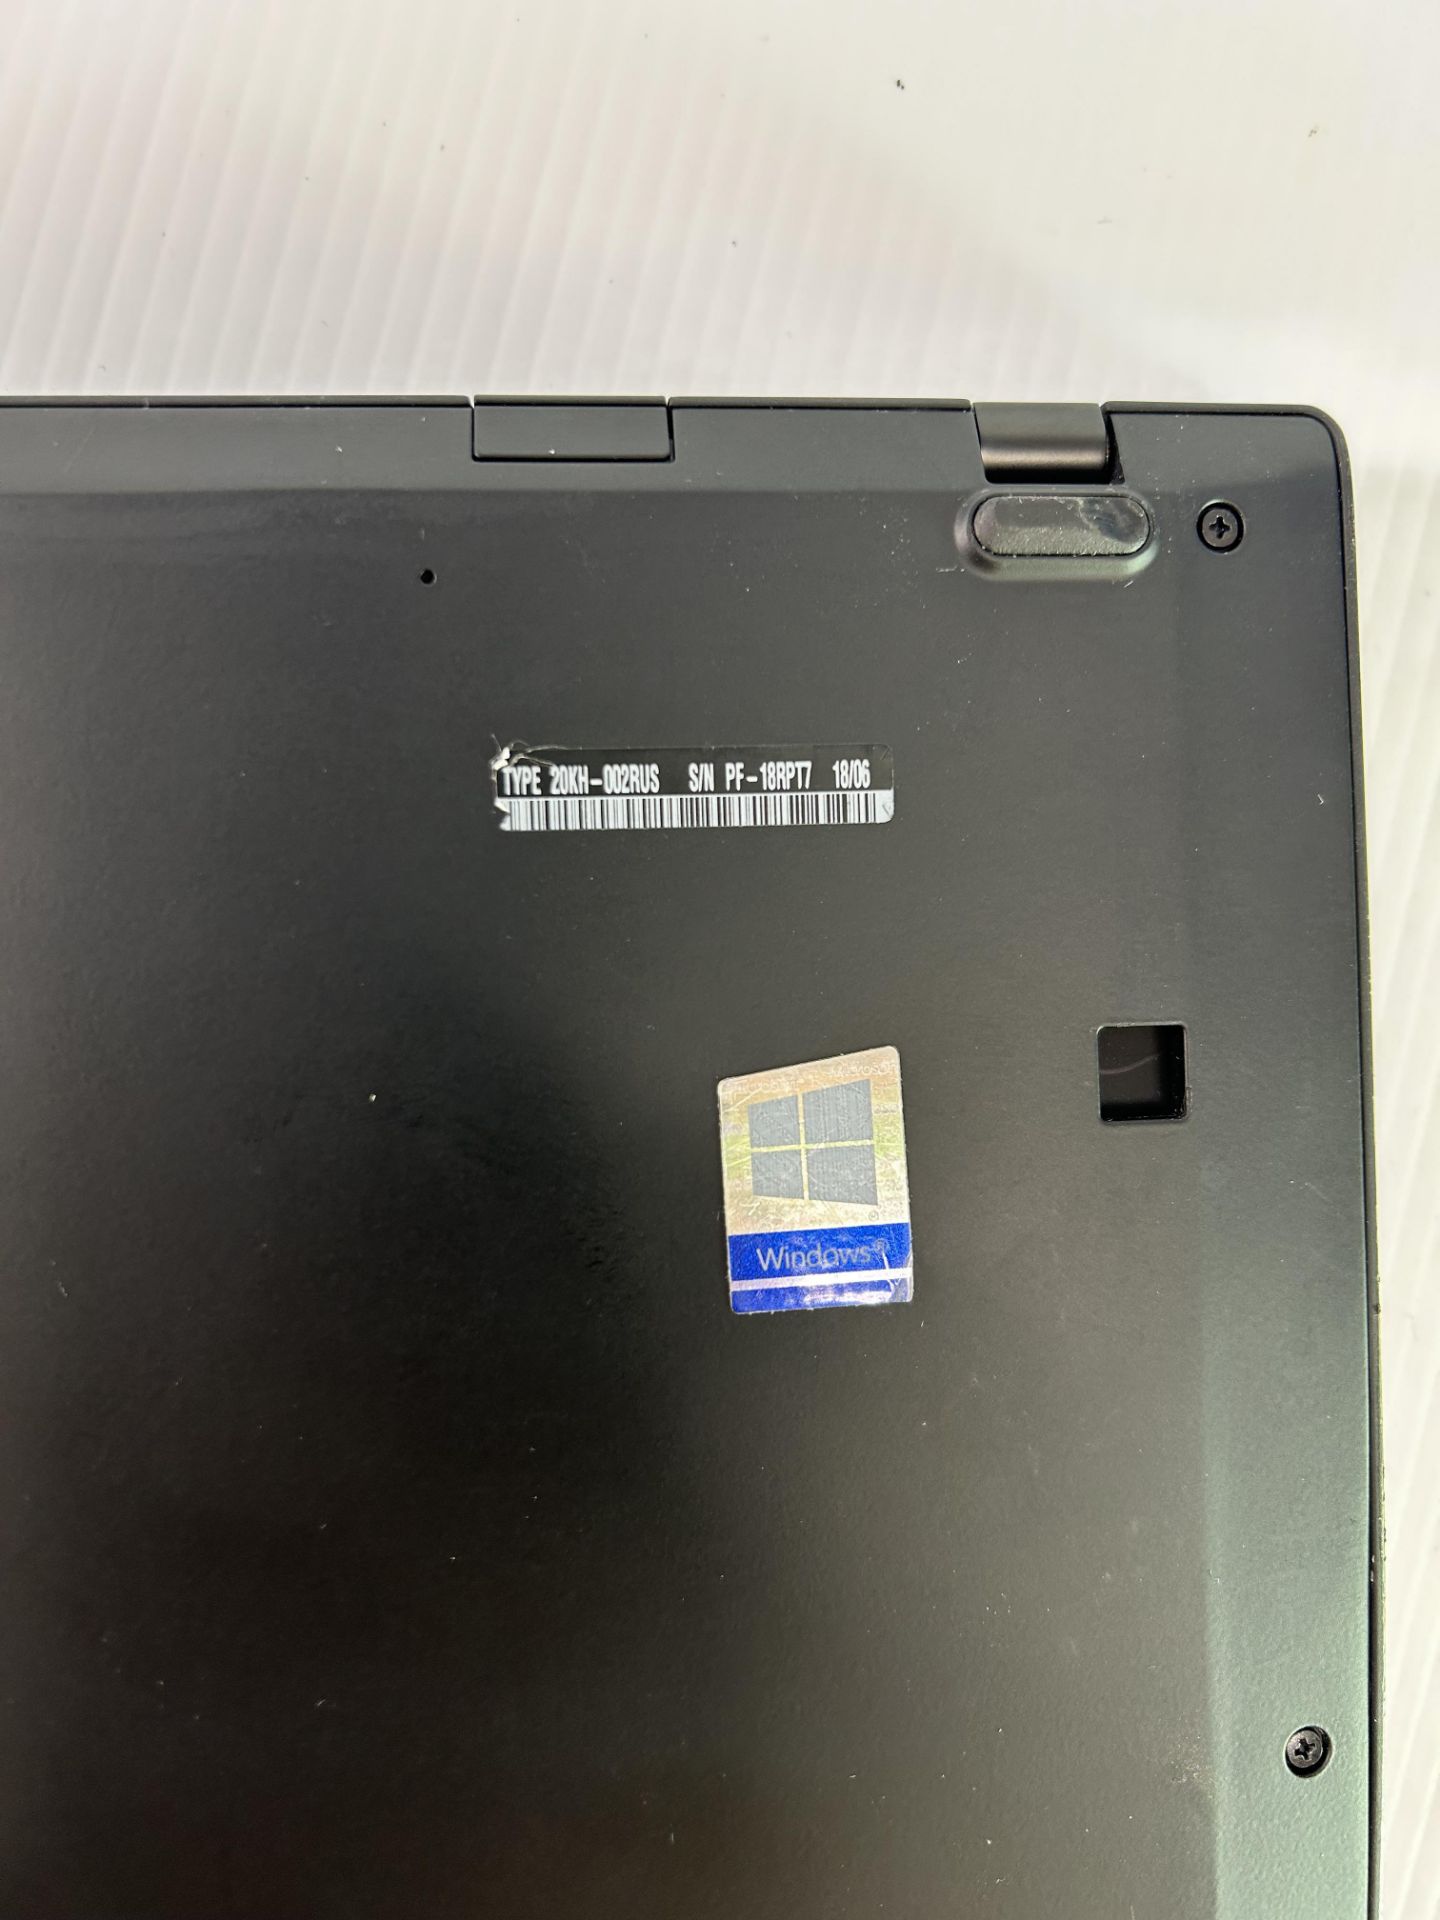 2018 6th Generation ThinkPad X1 Carbon Laptop Model- 20kh-002rus 18/08, 512GB Hard Drive, 8th Gen I7 - Image 3 of 3